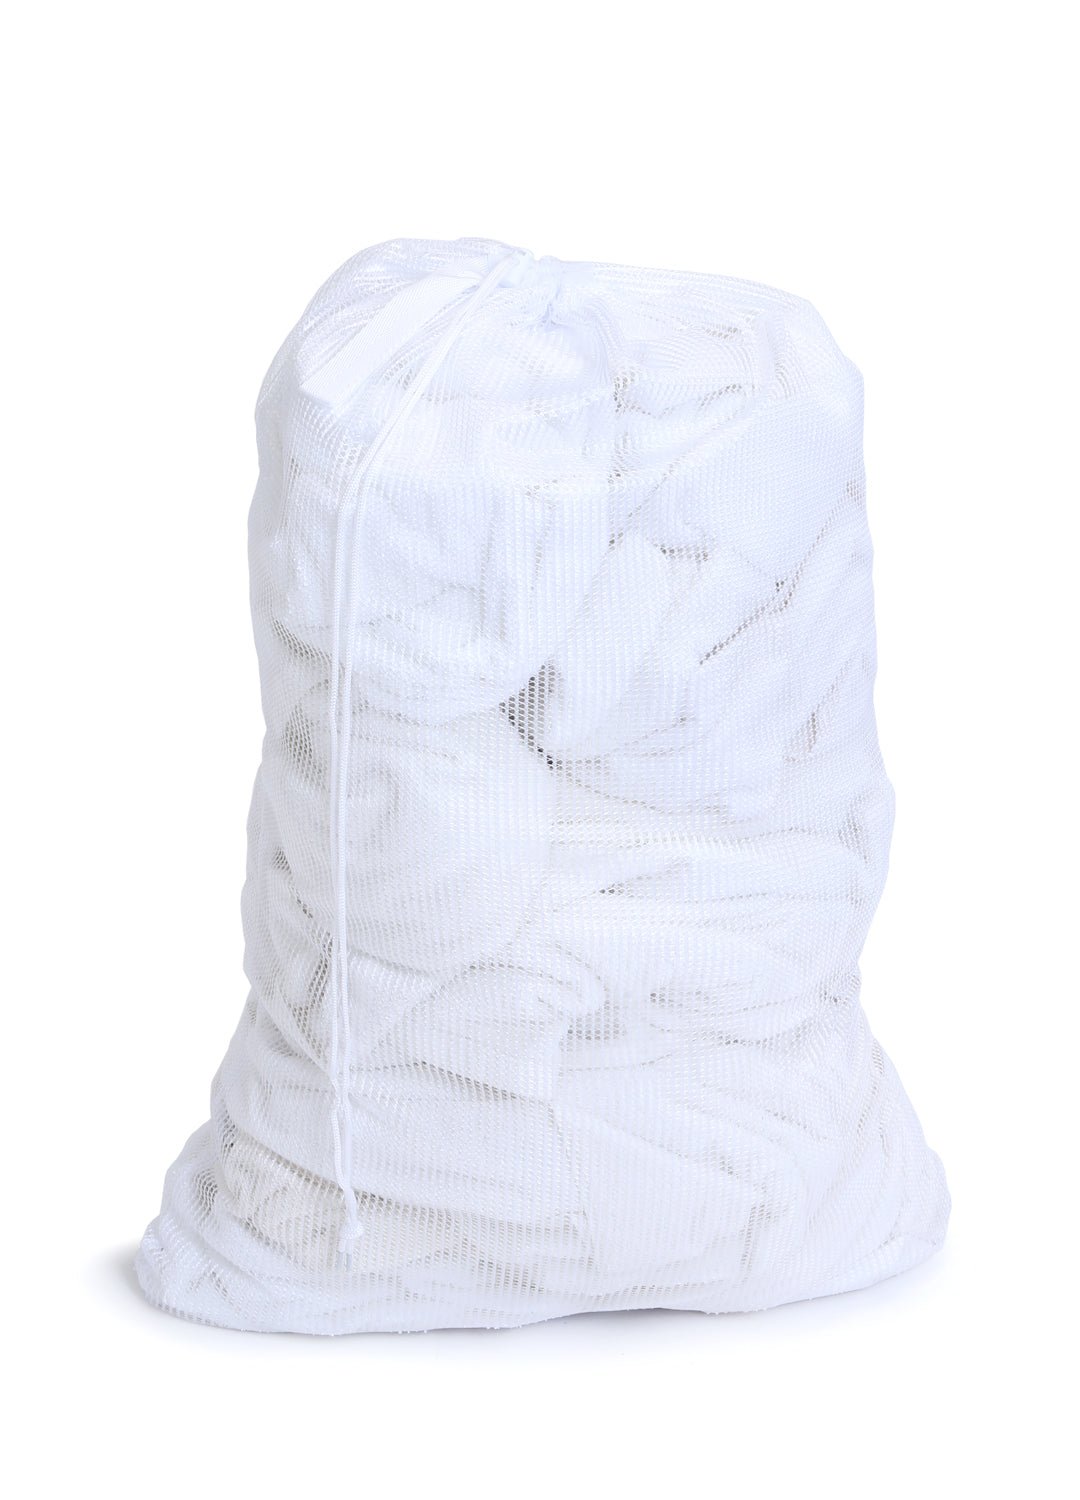 Mesh Laundry Bag with Handle and Push Lock Drawstring - Bright White - Smart Design® 1